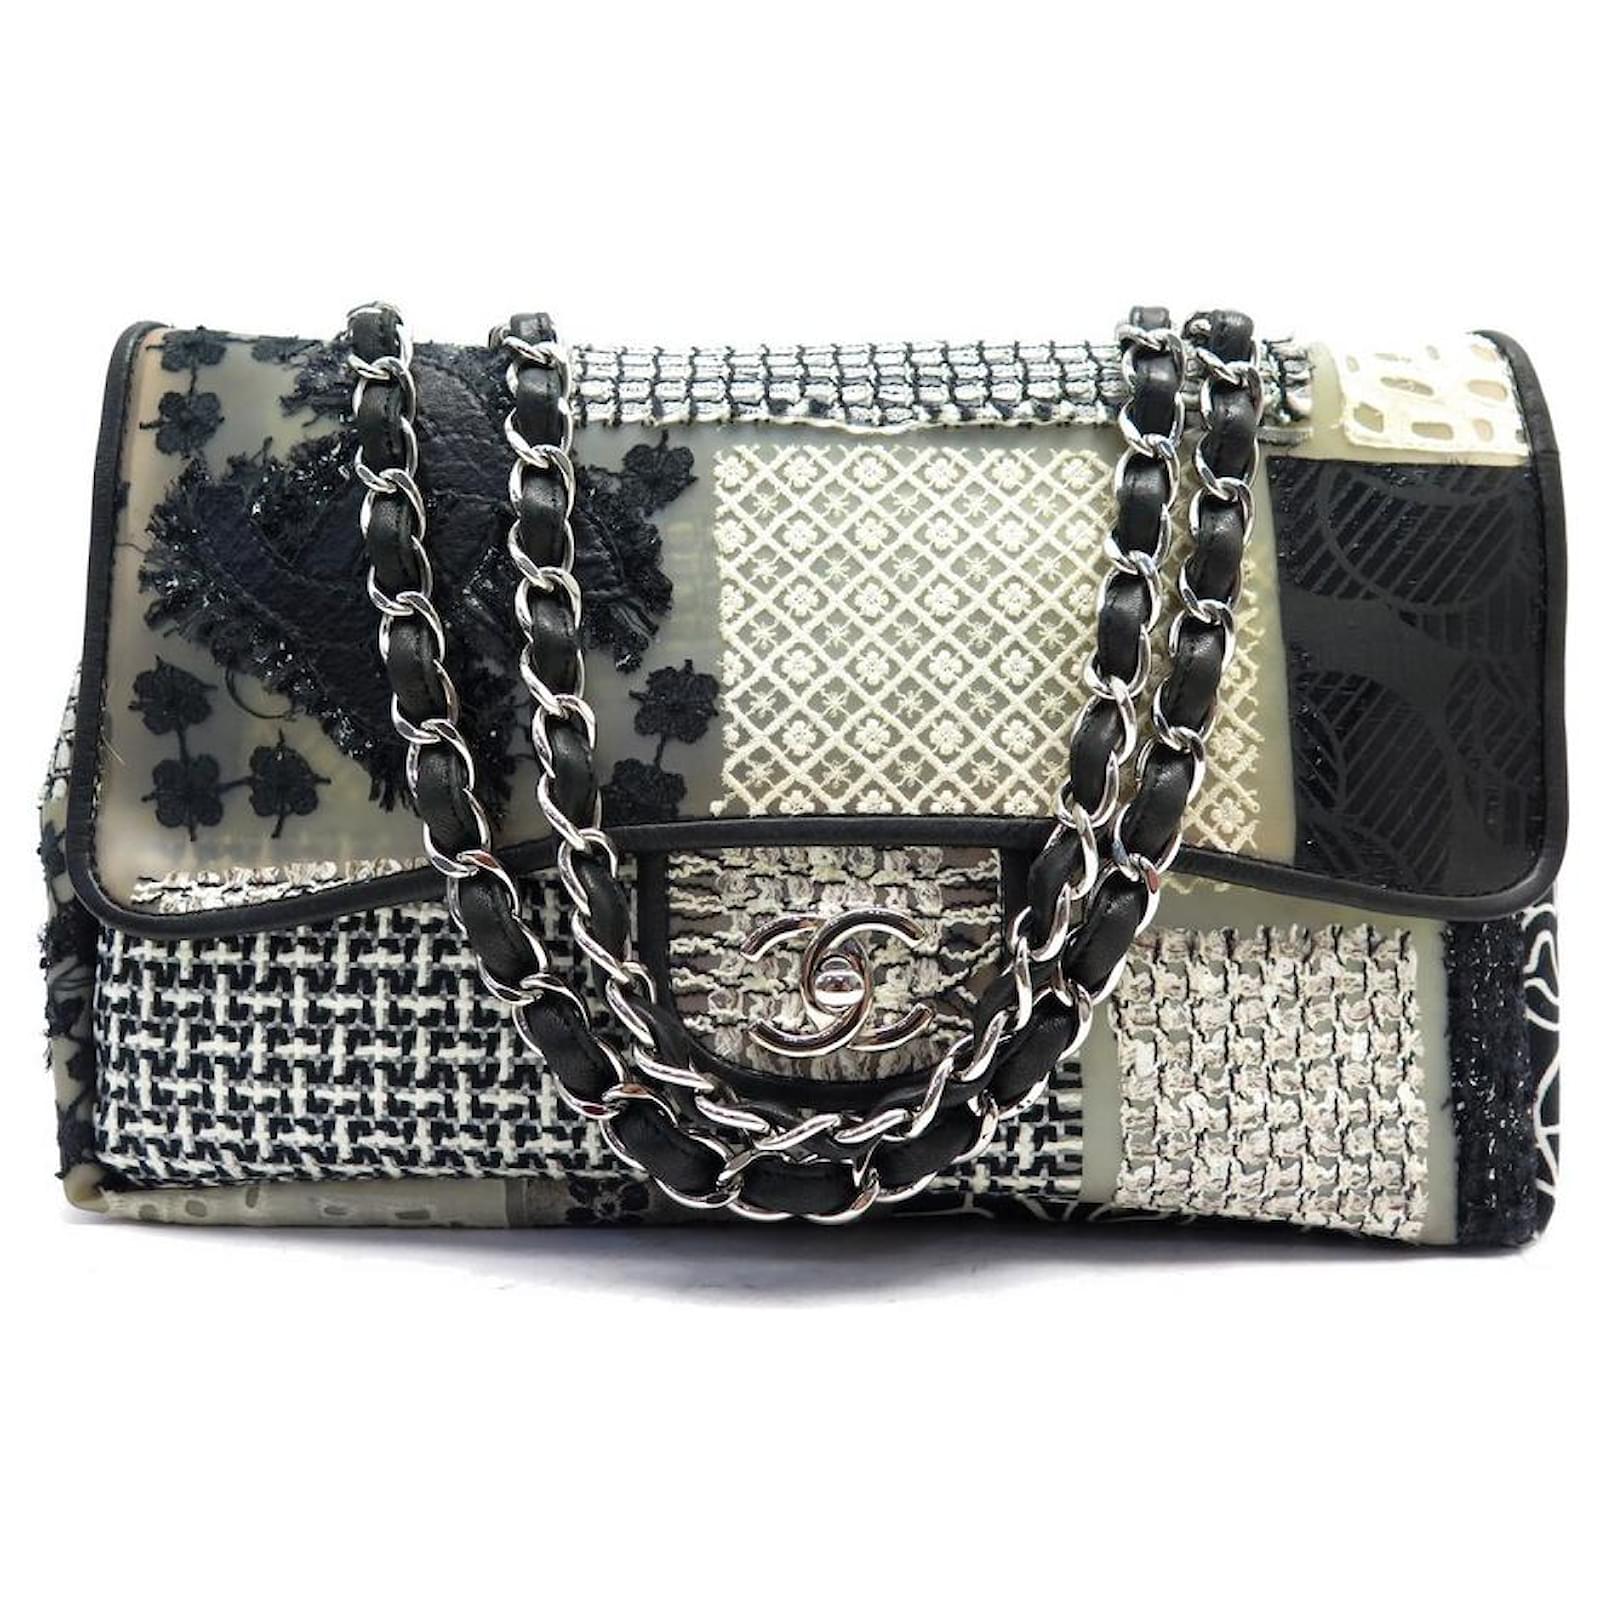 Handbags Chanel Chanel Grand Timeless Patchwork Plastic Crossbody Hand Bag Handbag